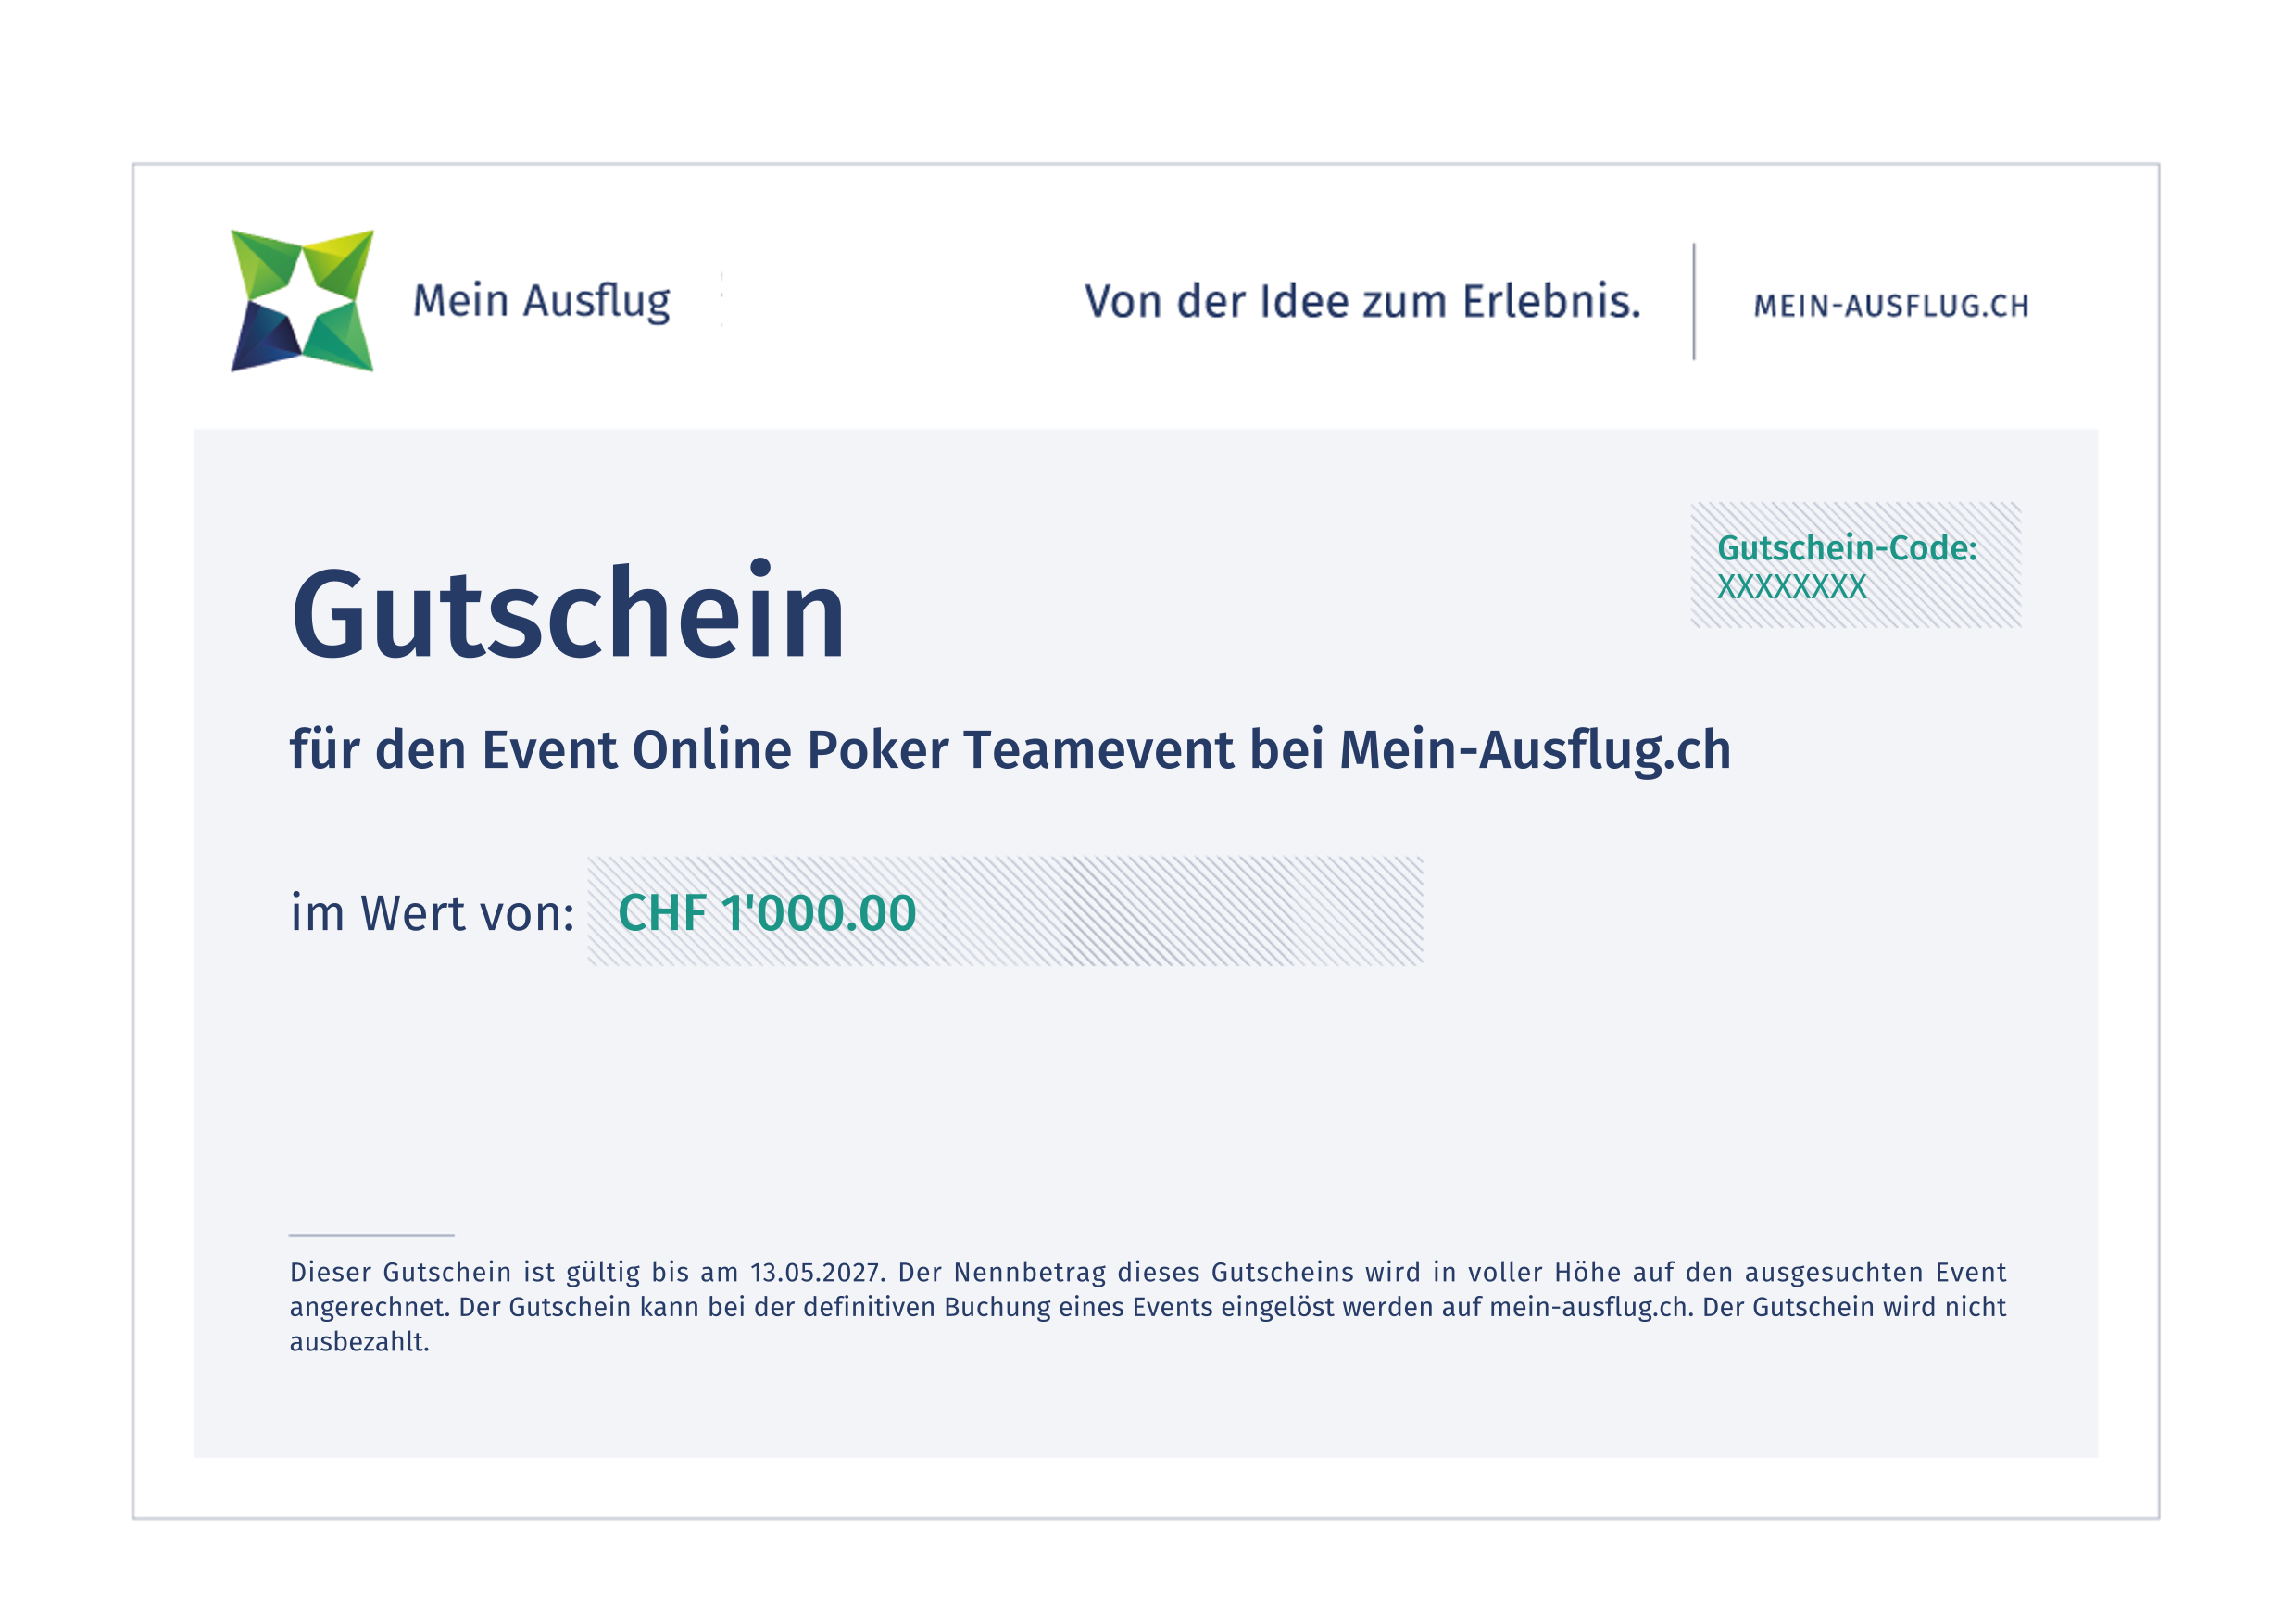 Online Poker Teamevent